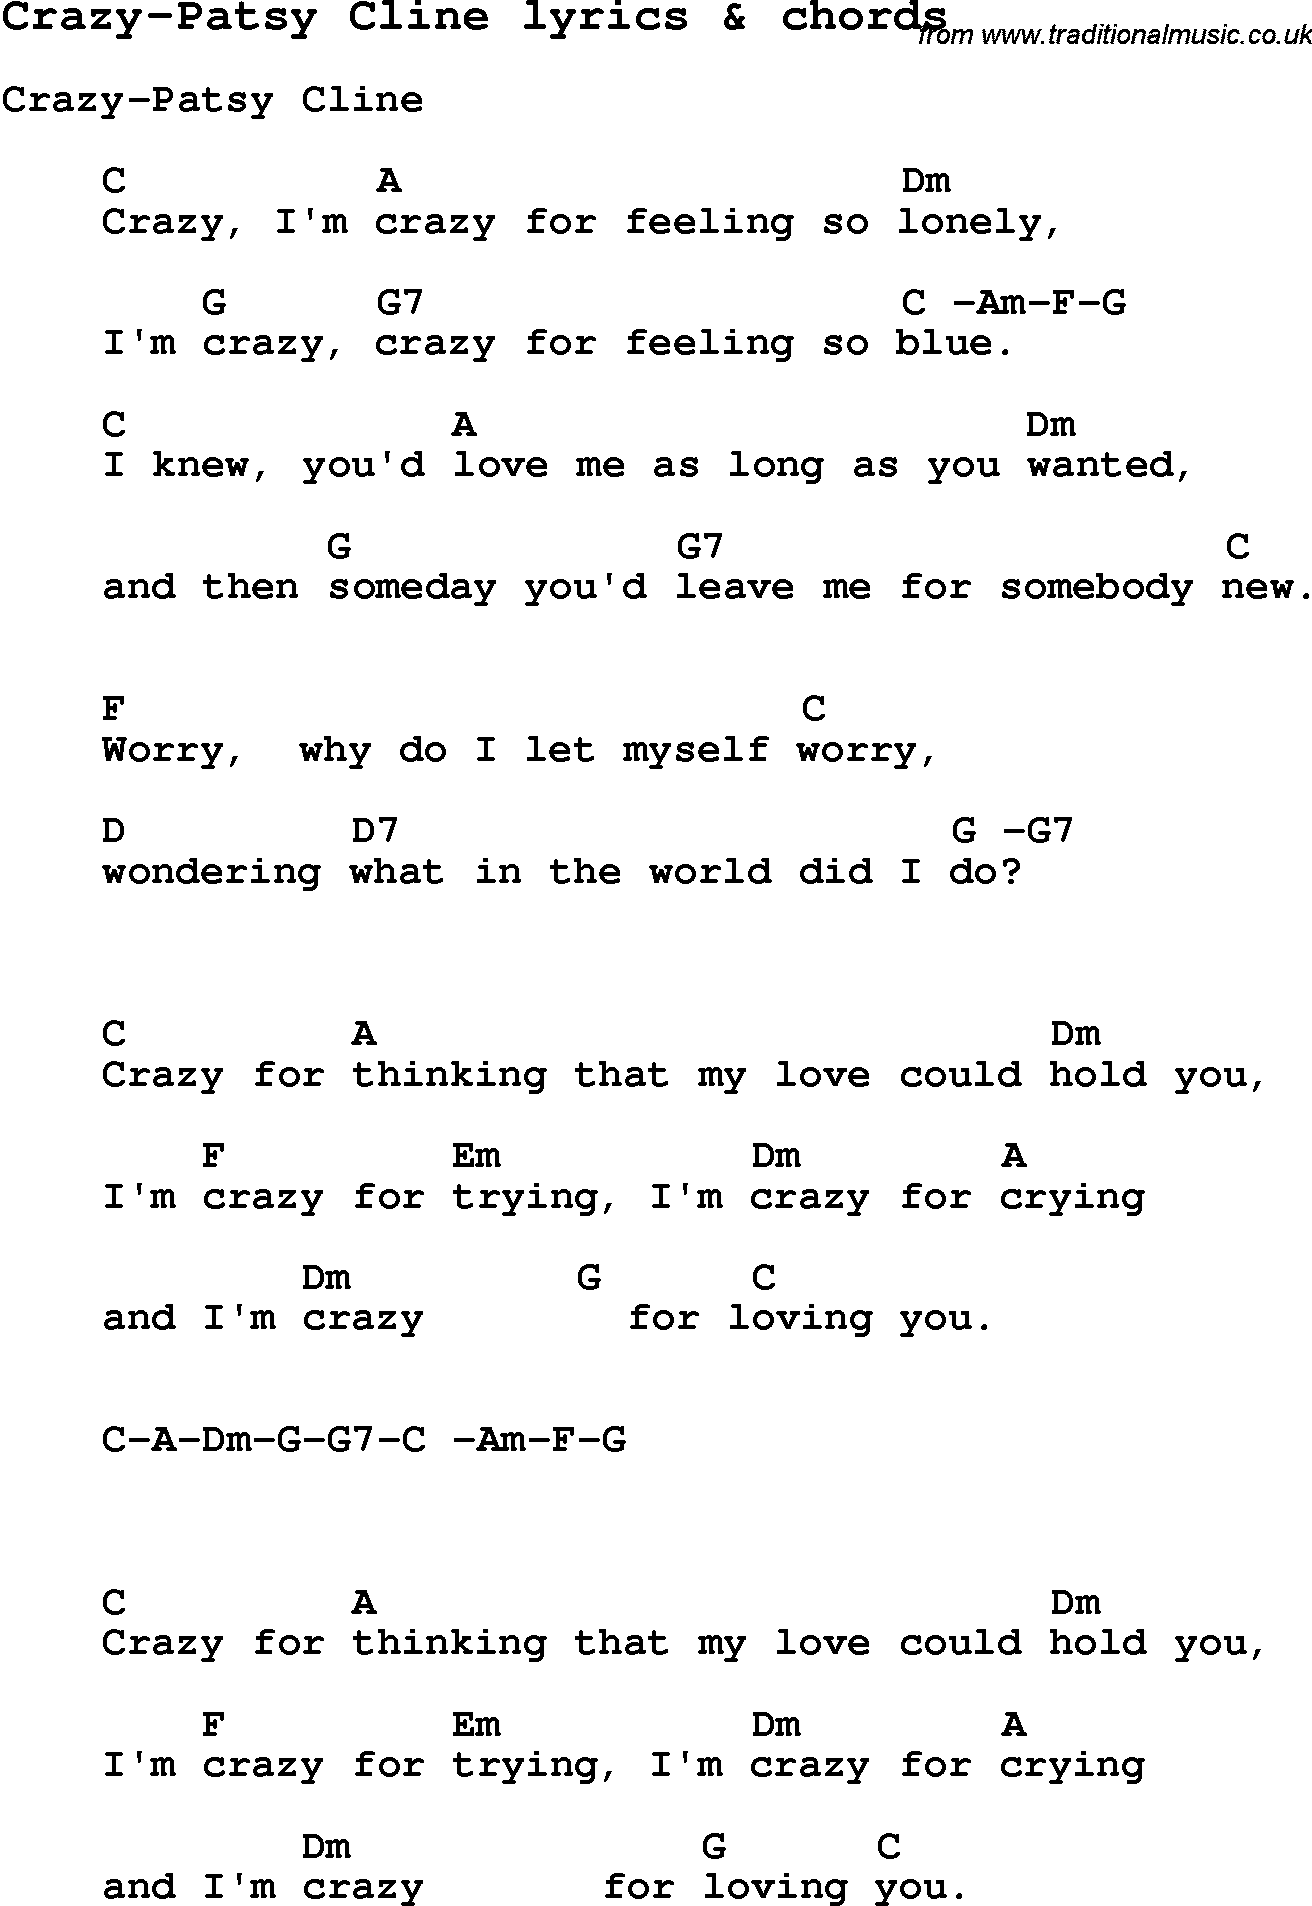 Love Song Lyrics for: Crazy-Patsy Cline with chords for Ukulele, Guitar Banjo etc.